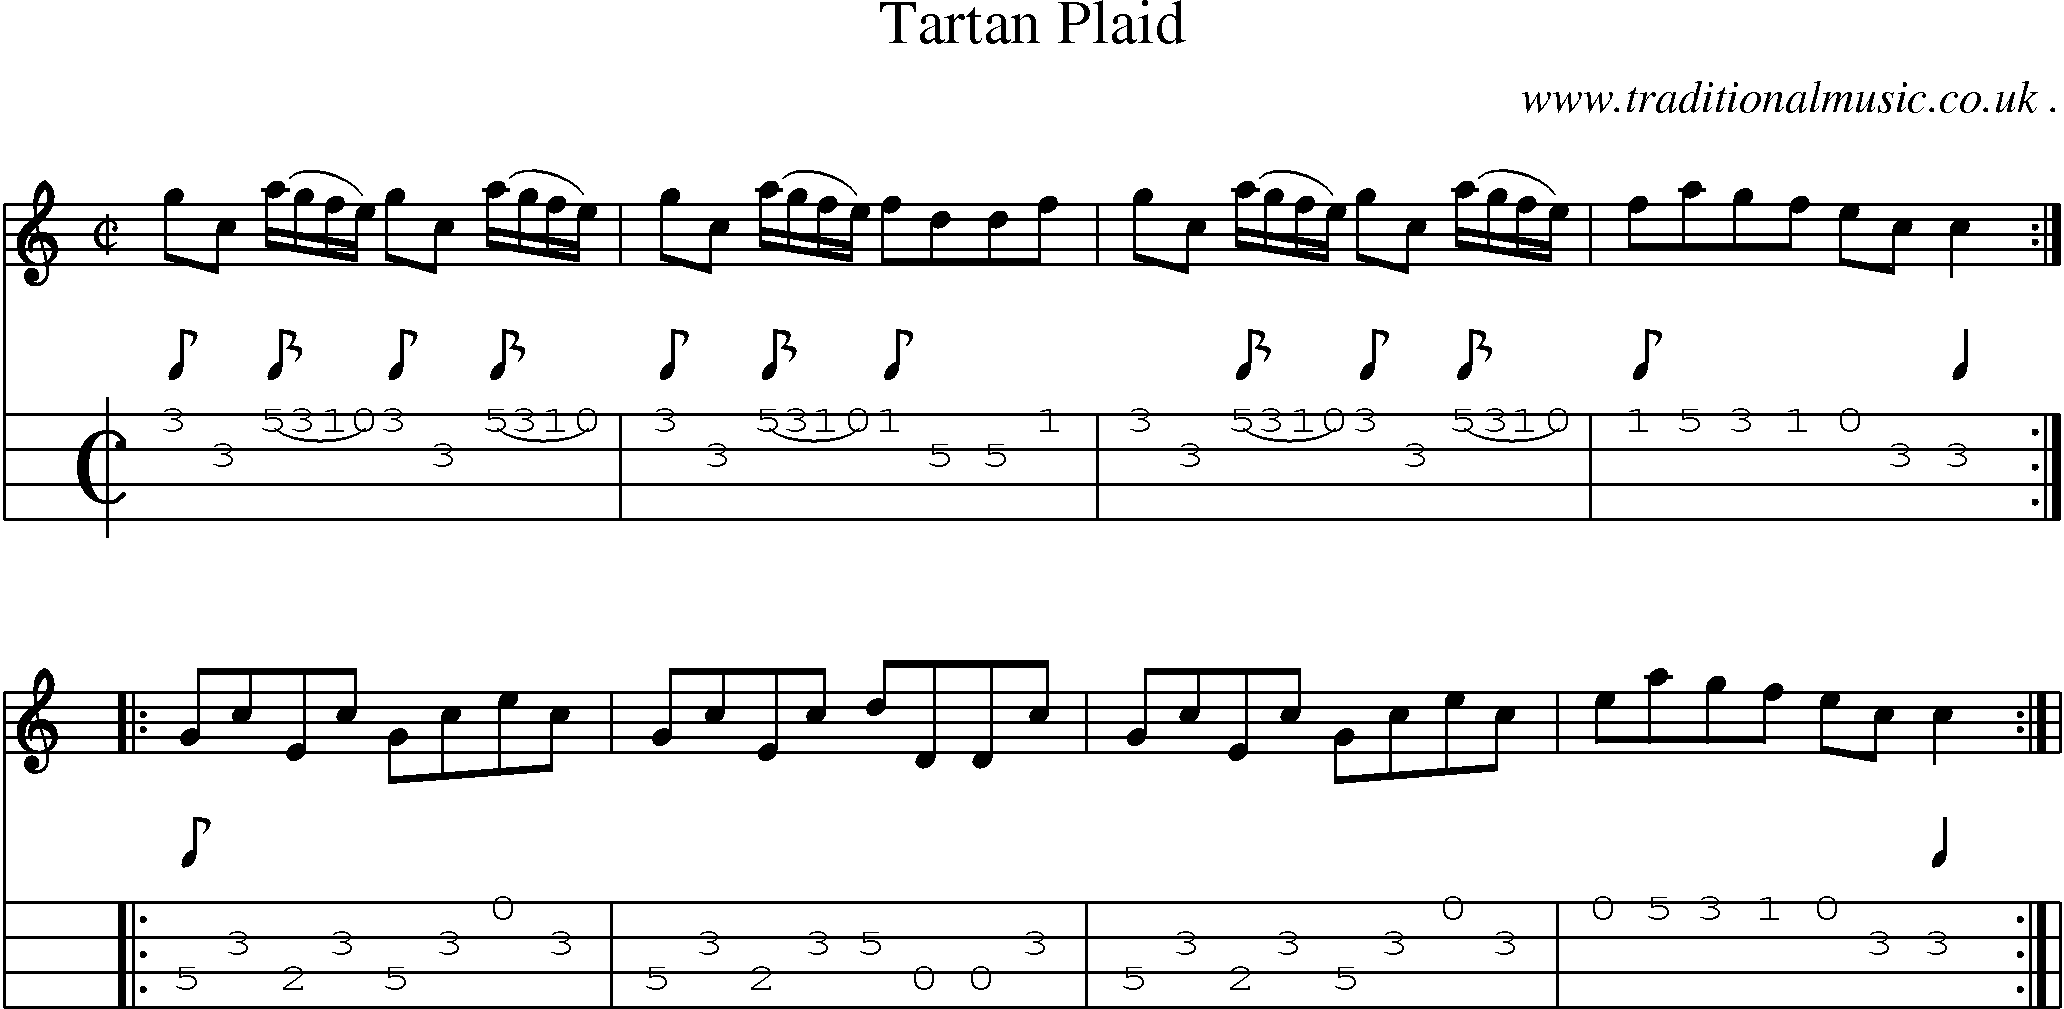 Sheet-Music and Mandolin Tabs for Tartan Plaid